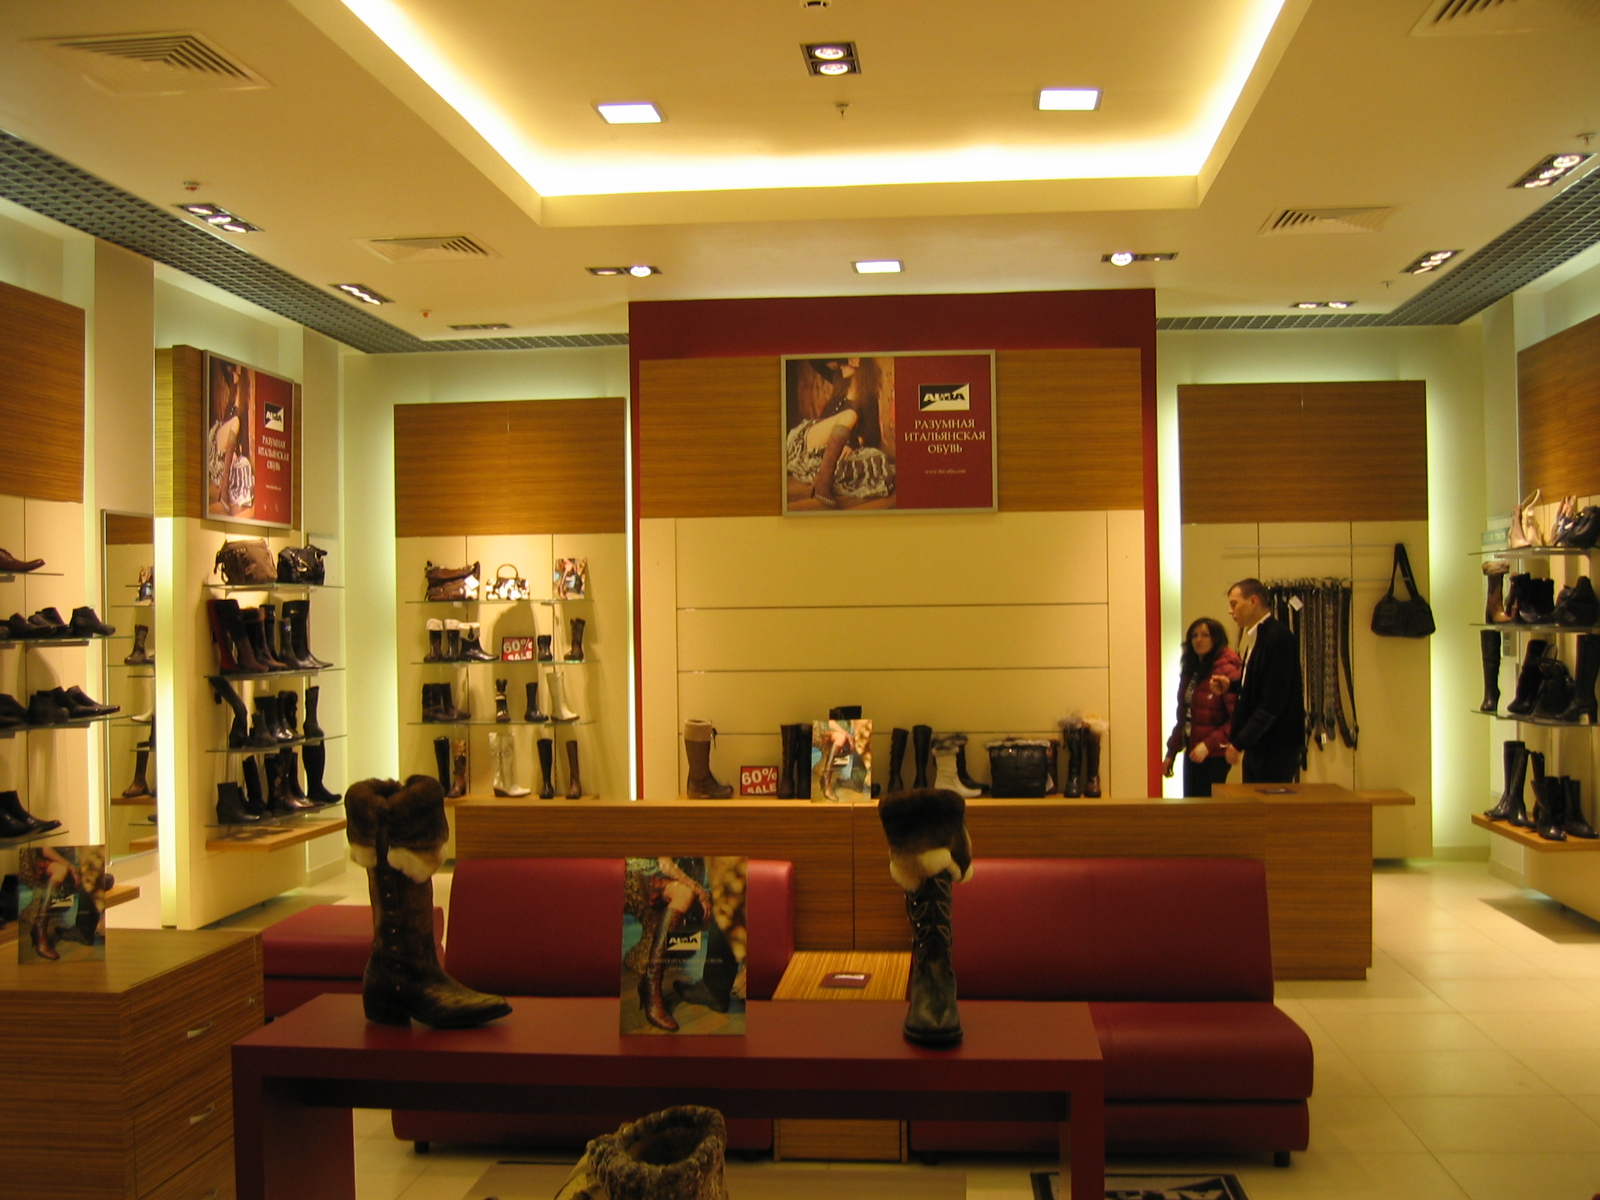 Магазин Обуви Альба Каталог